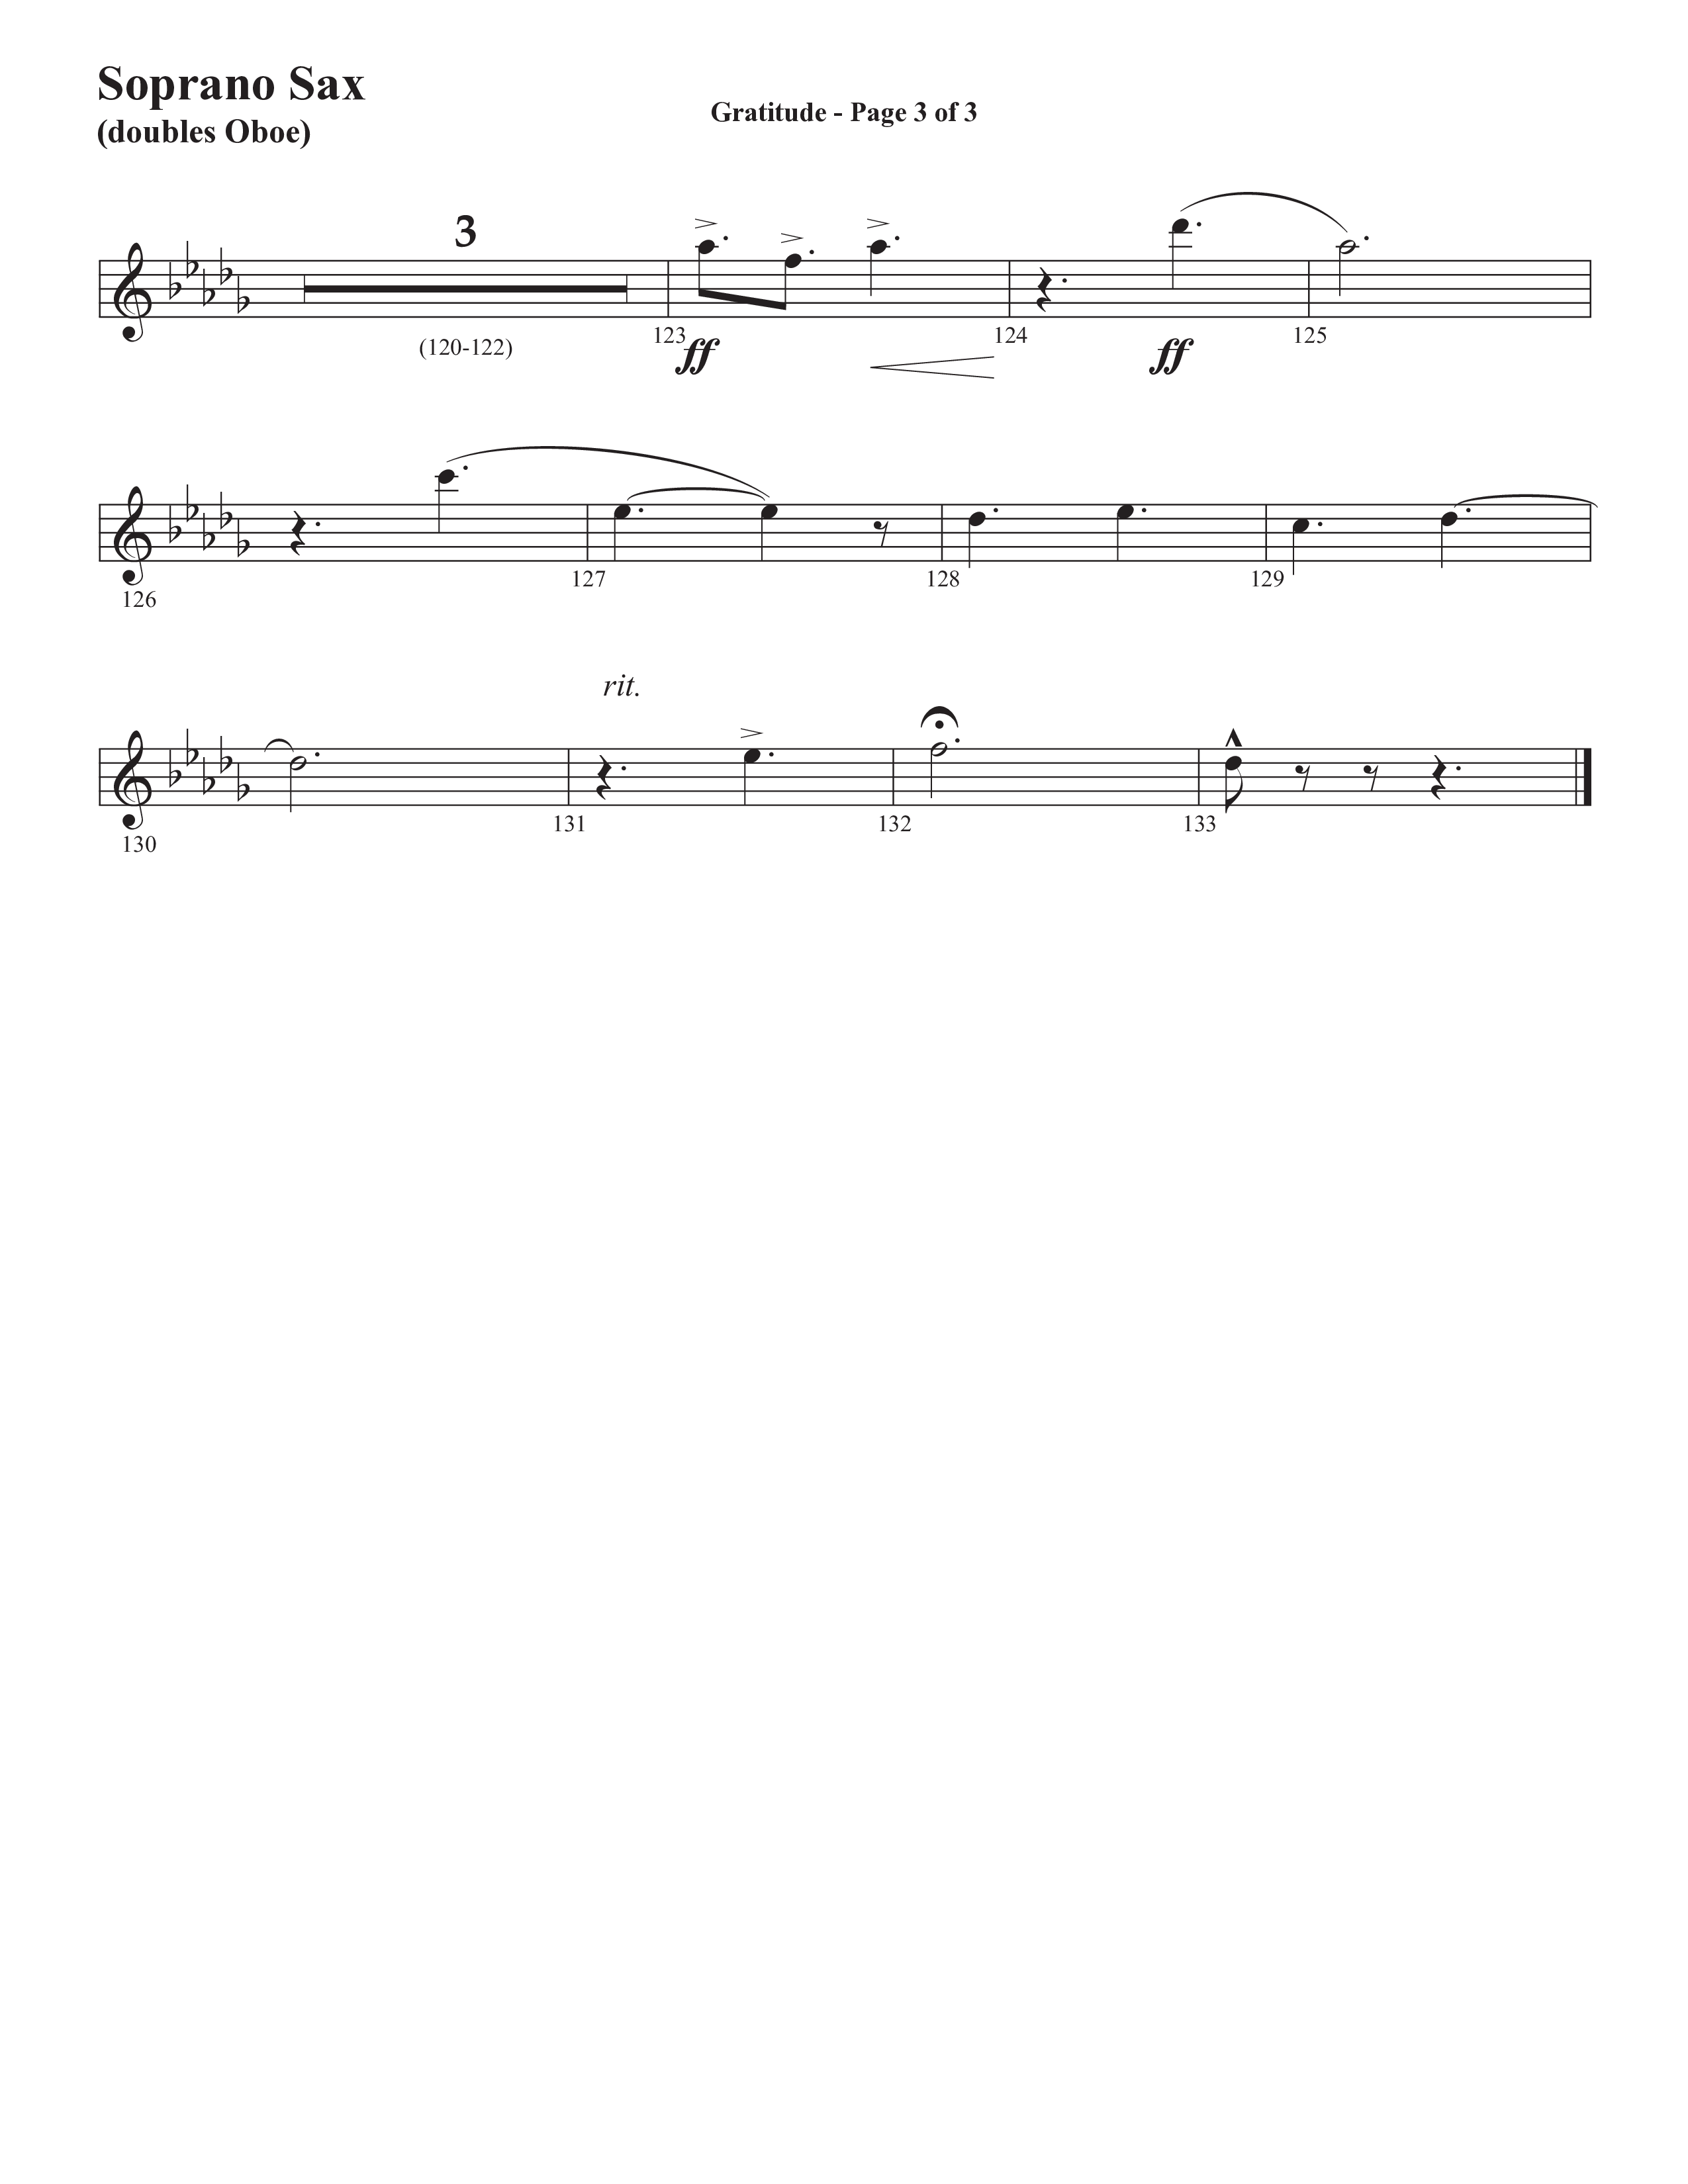 Gratitude (Choral Anthem SATB) Soprano Sax (Semsen Music / Arr. John Bolin / Orch. Cliff Duren)